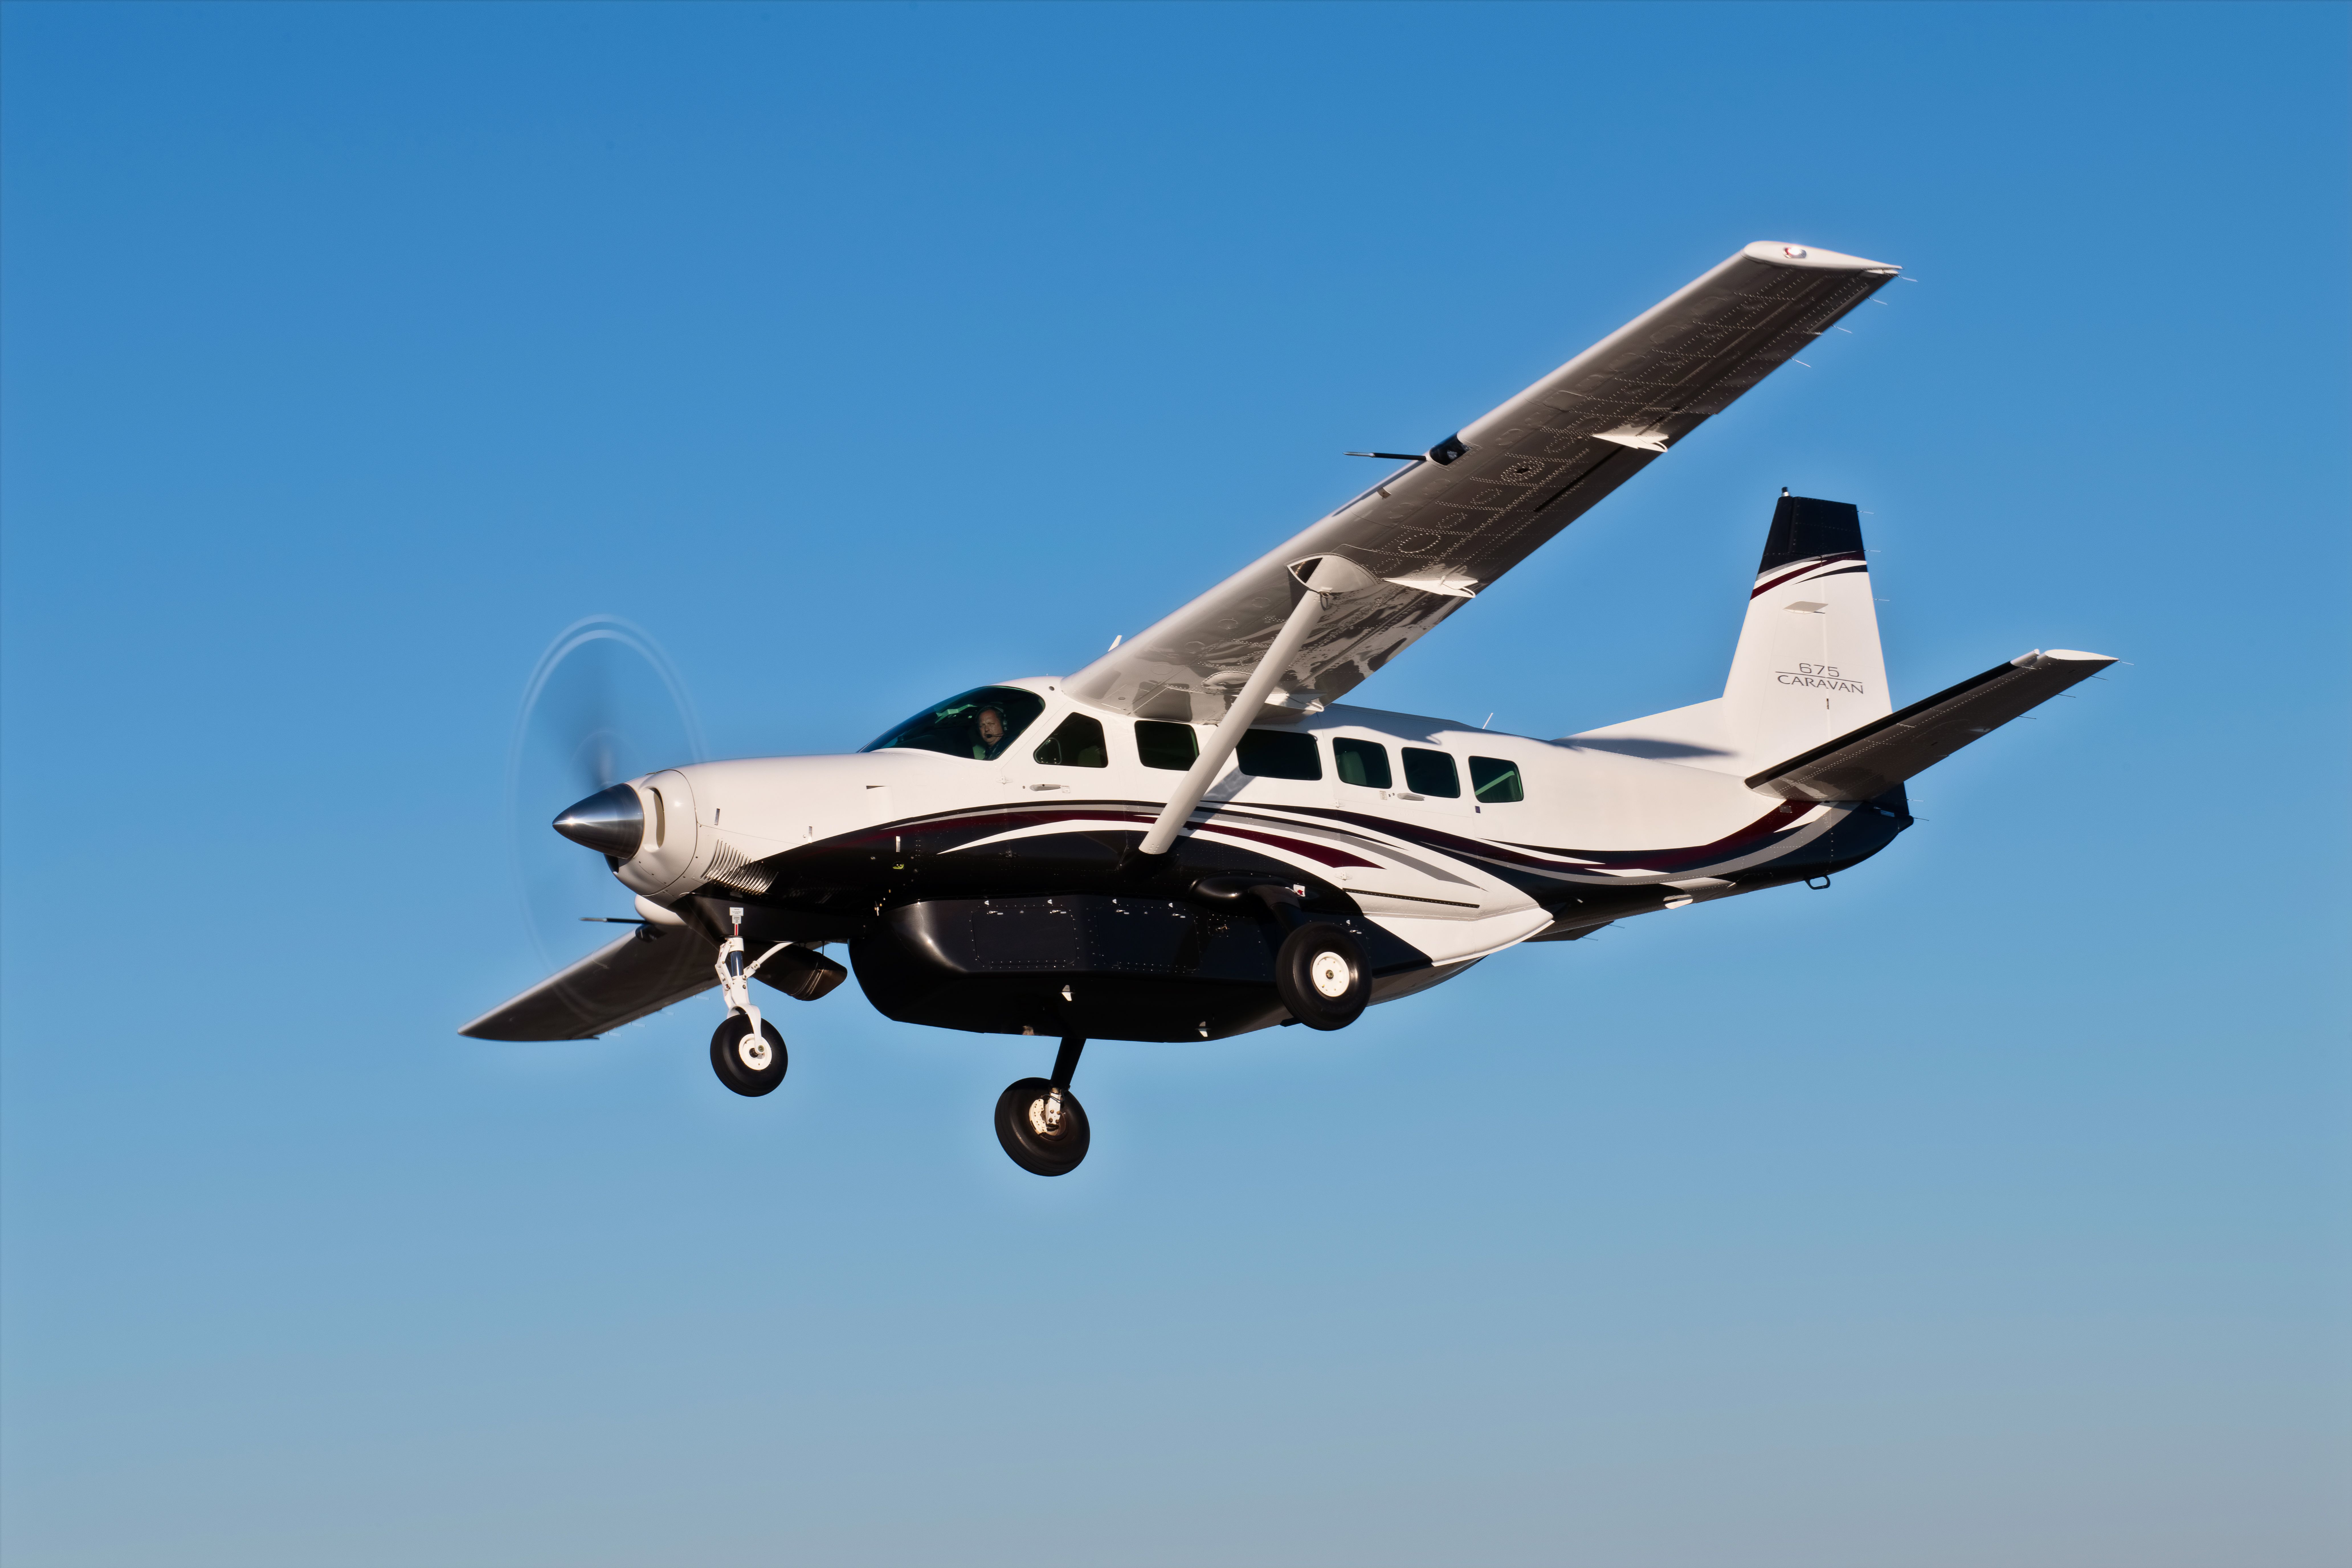 A Cessna Grand Caravan Flying in the sky.